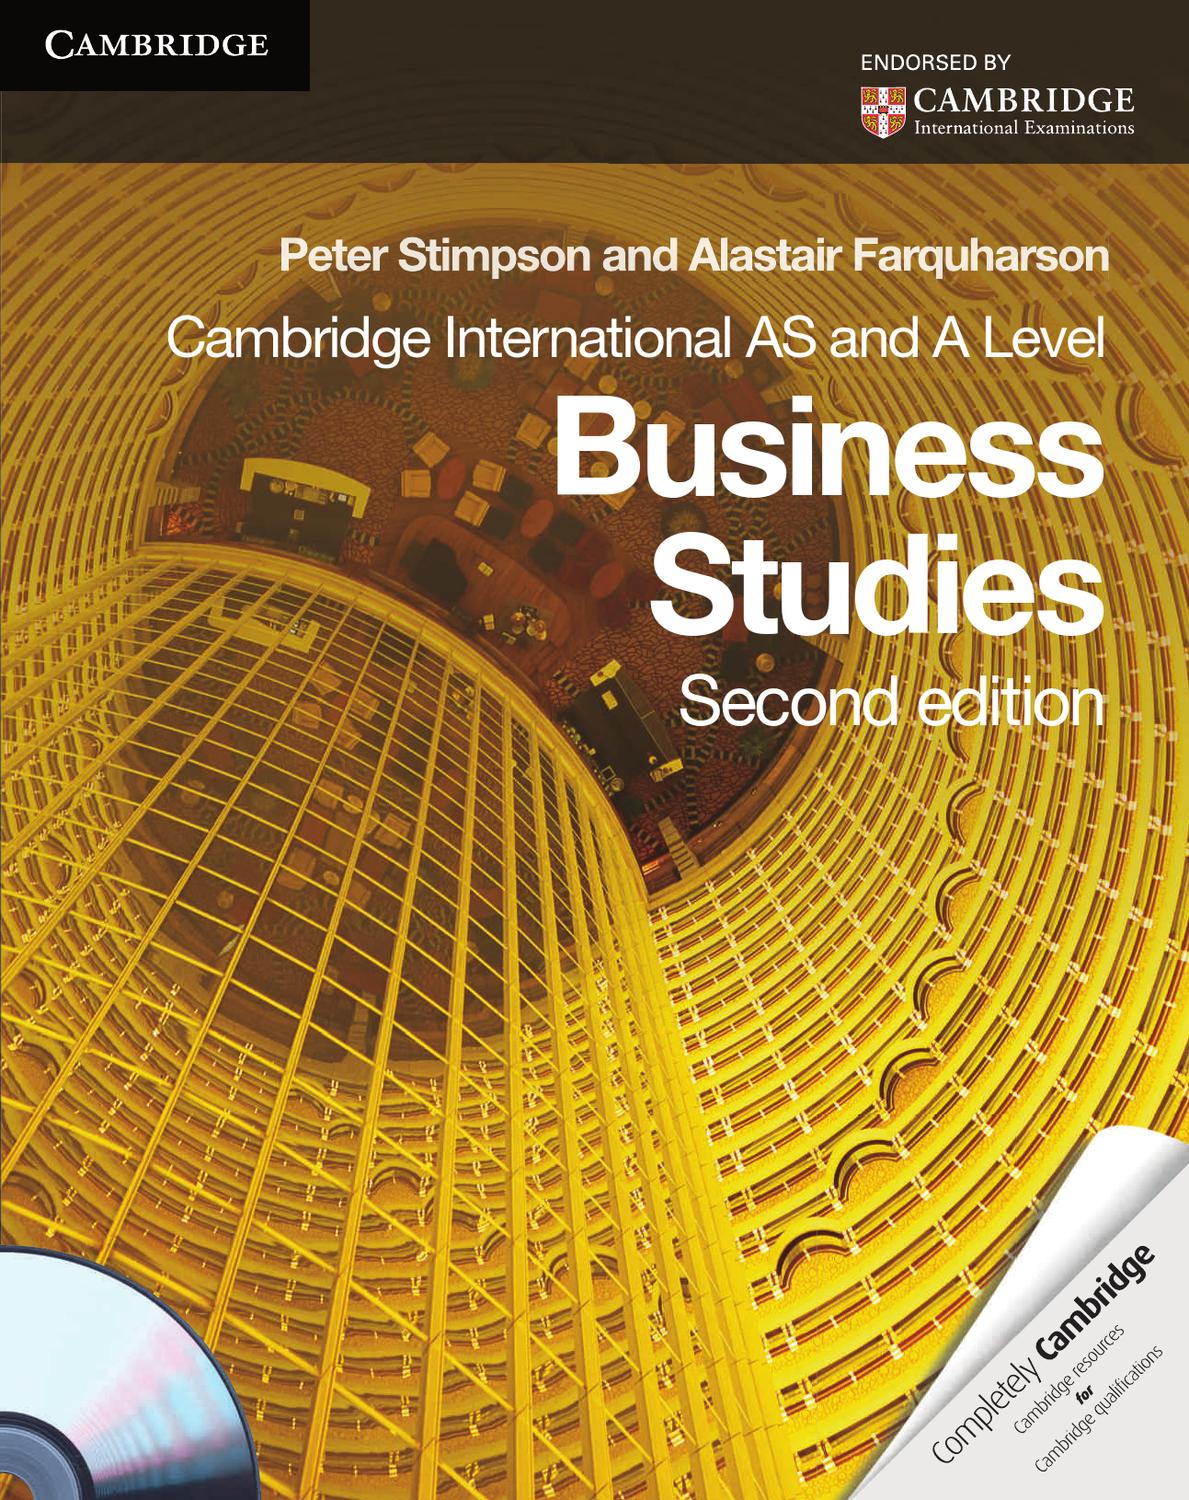 Business Studies Textbook Pdf